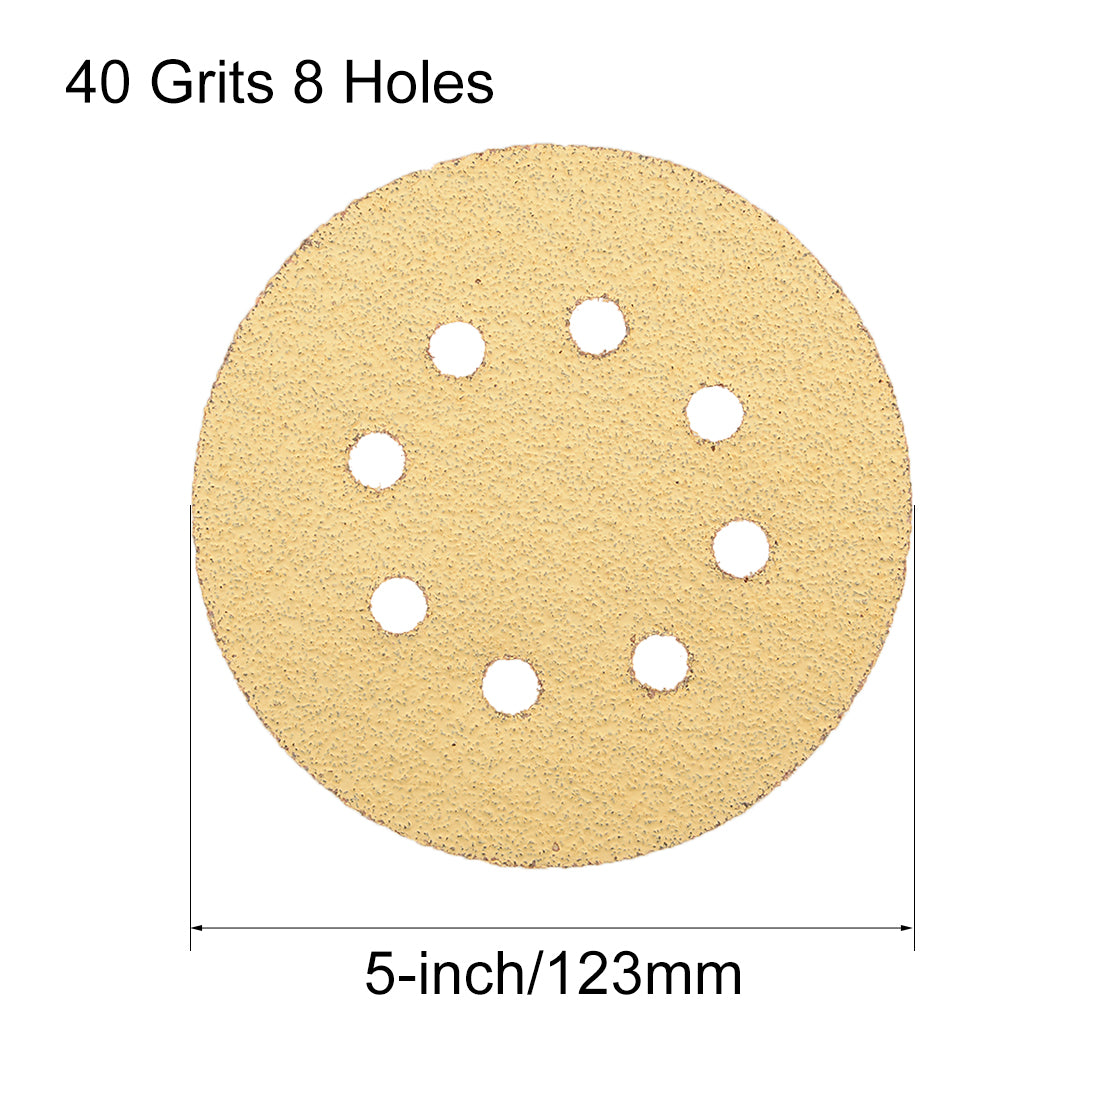 Uxcell Uxcell 5-inch Sanding Discs, 100-Grits 8-Holes Hook and Loop Wet Dry Flocking Sandpaper Sander Sand Paper for Random Orbital Sander 5pcs